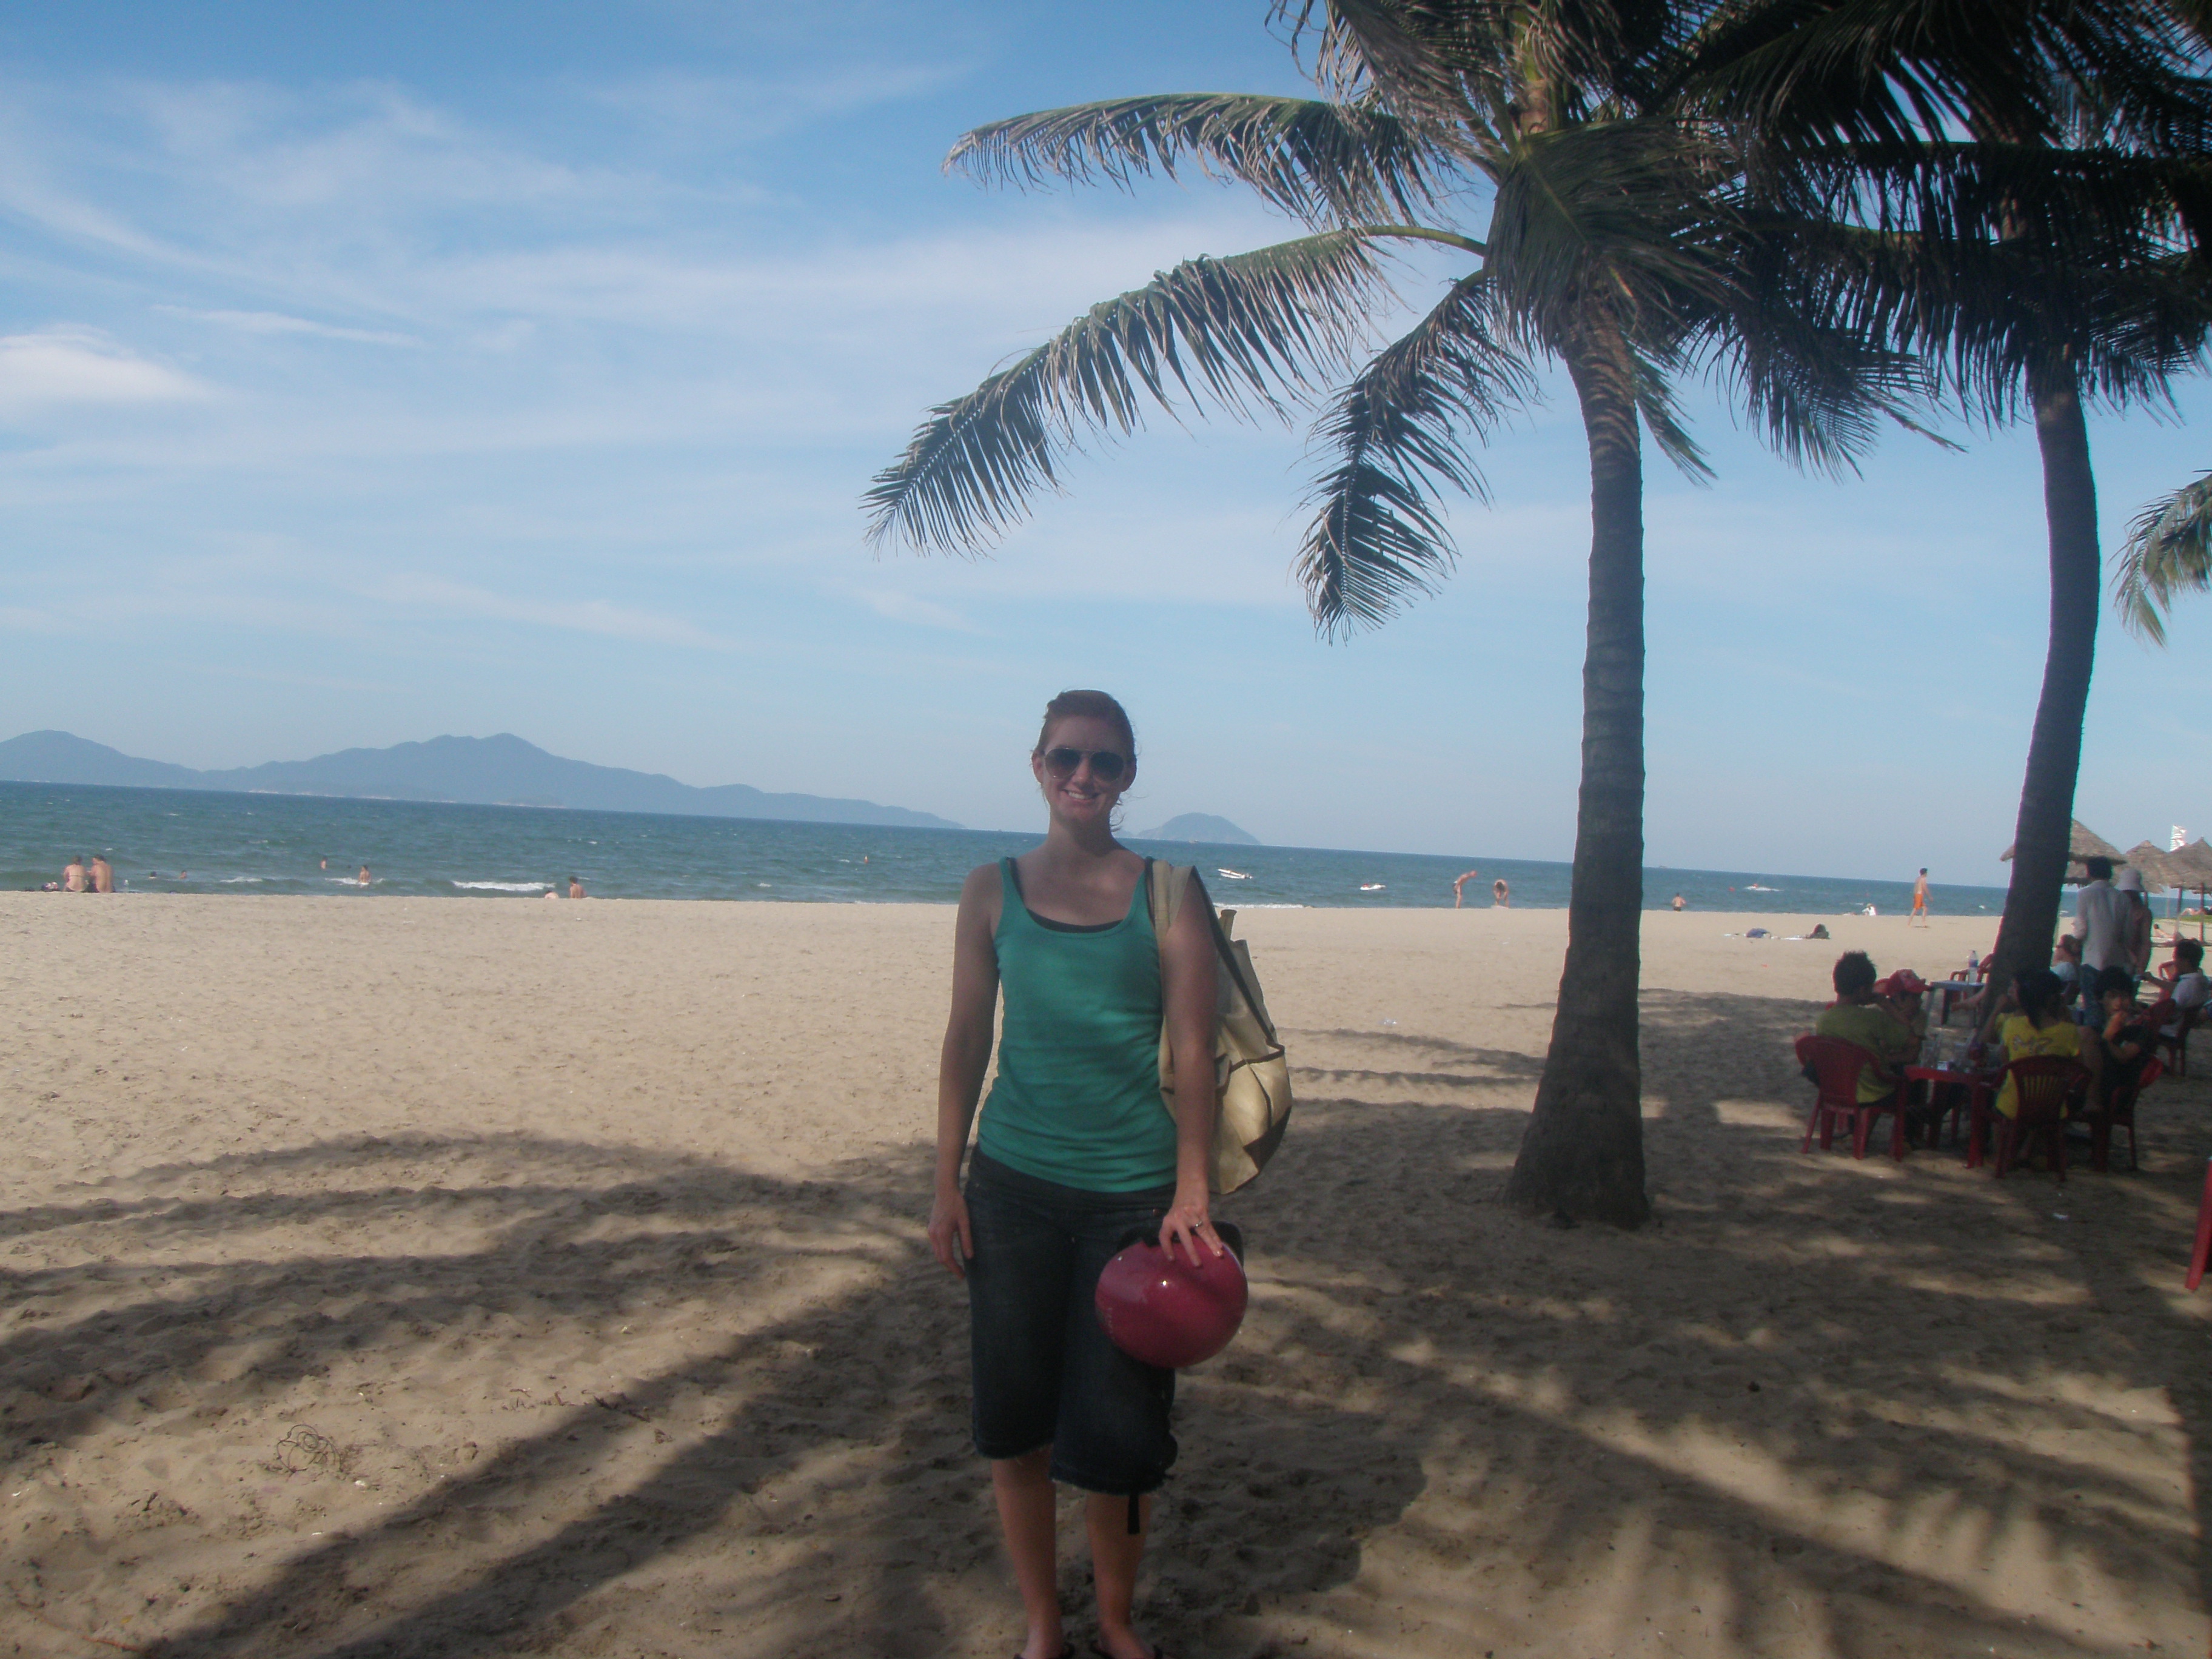 At the beach in Hoi An